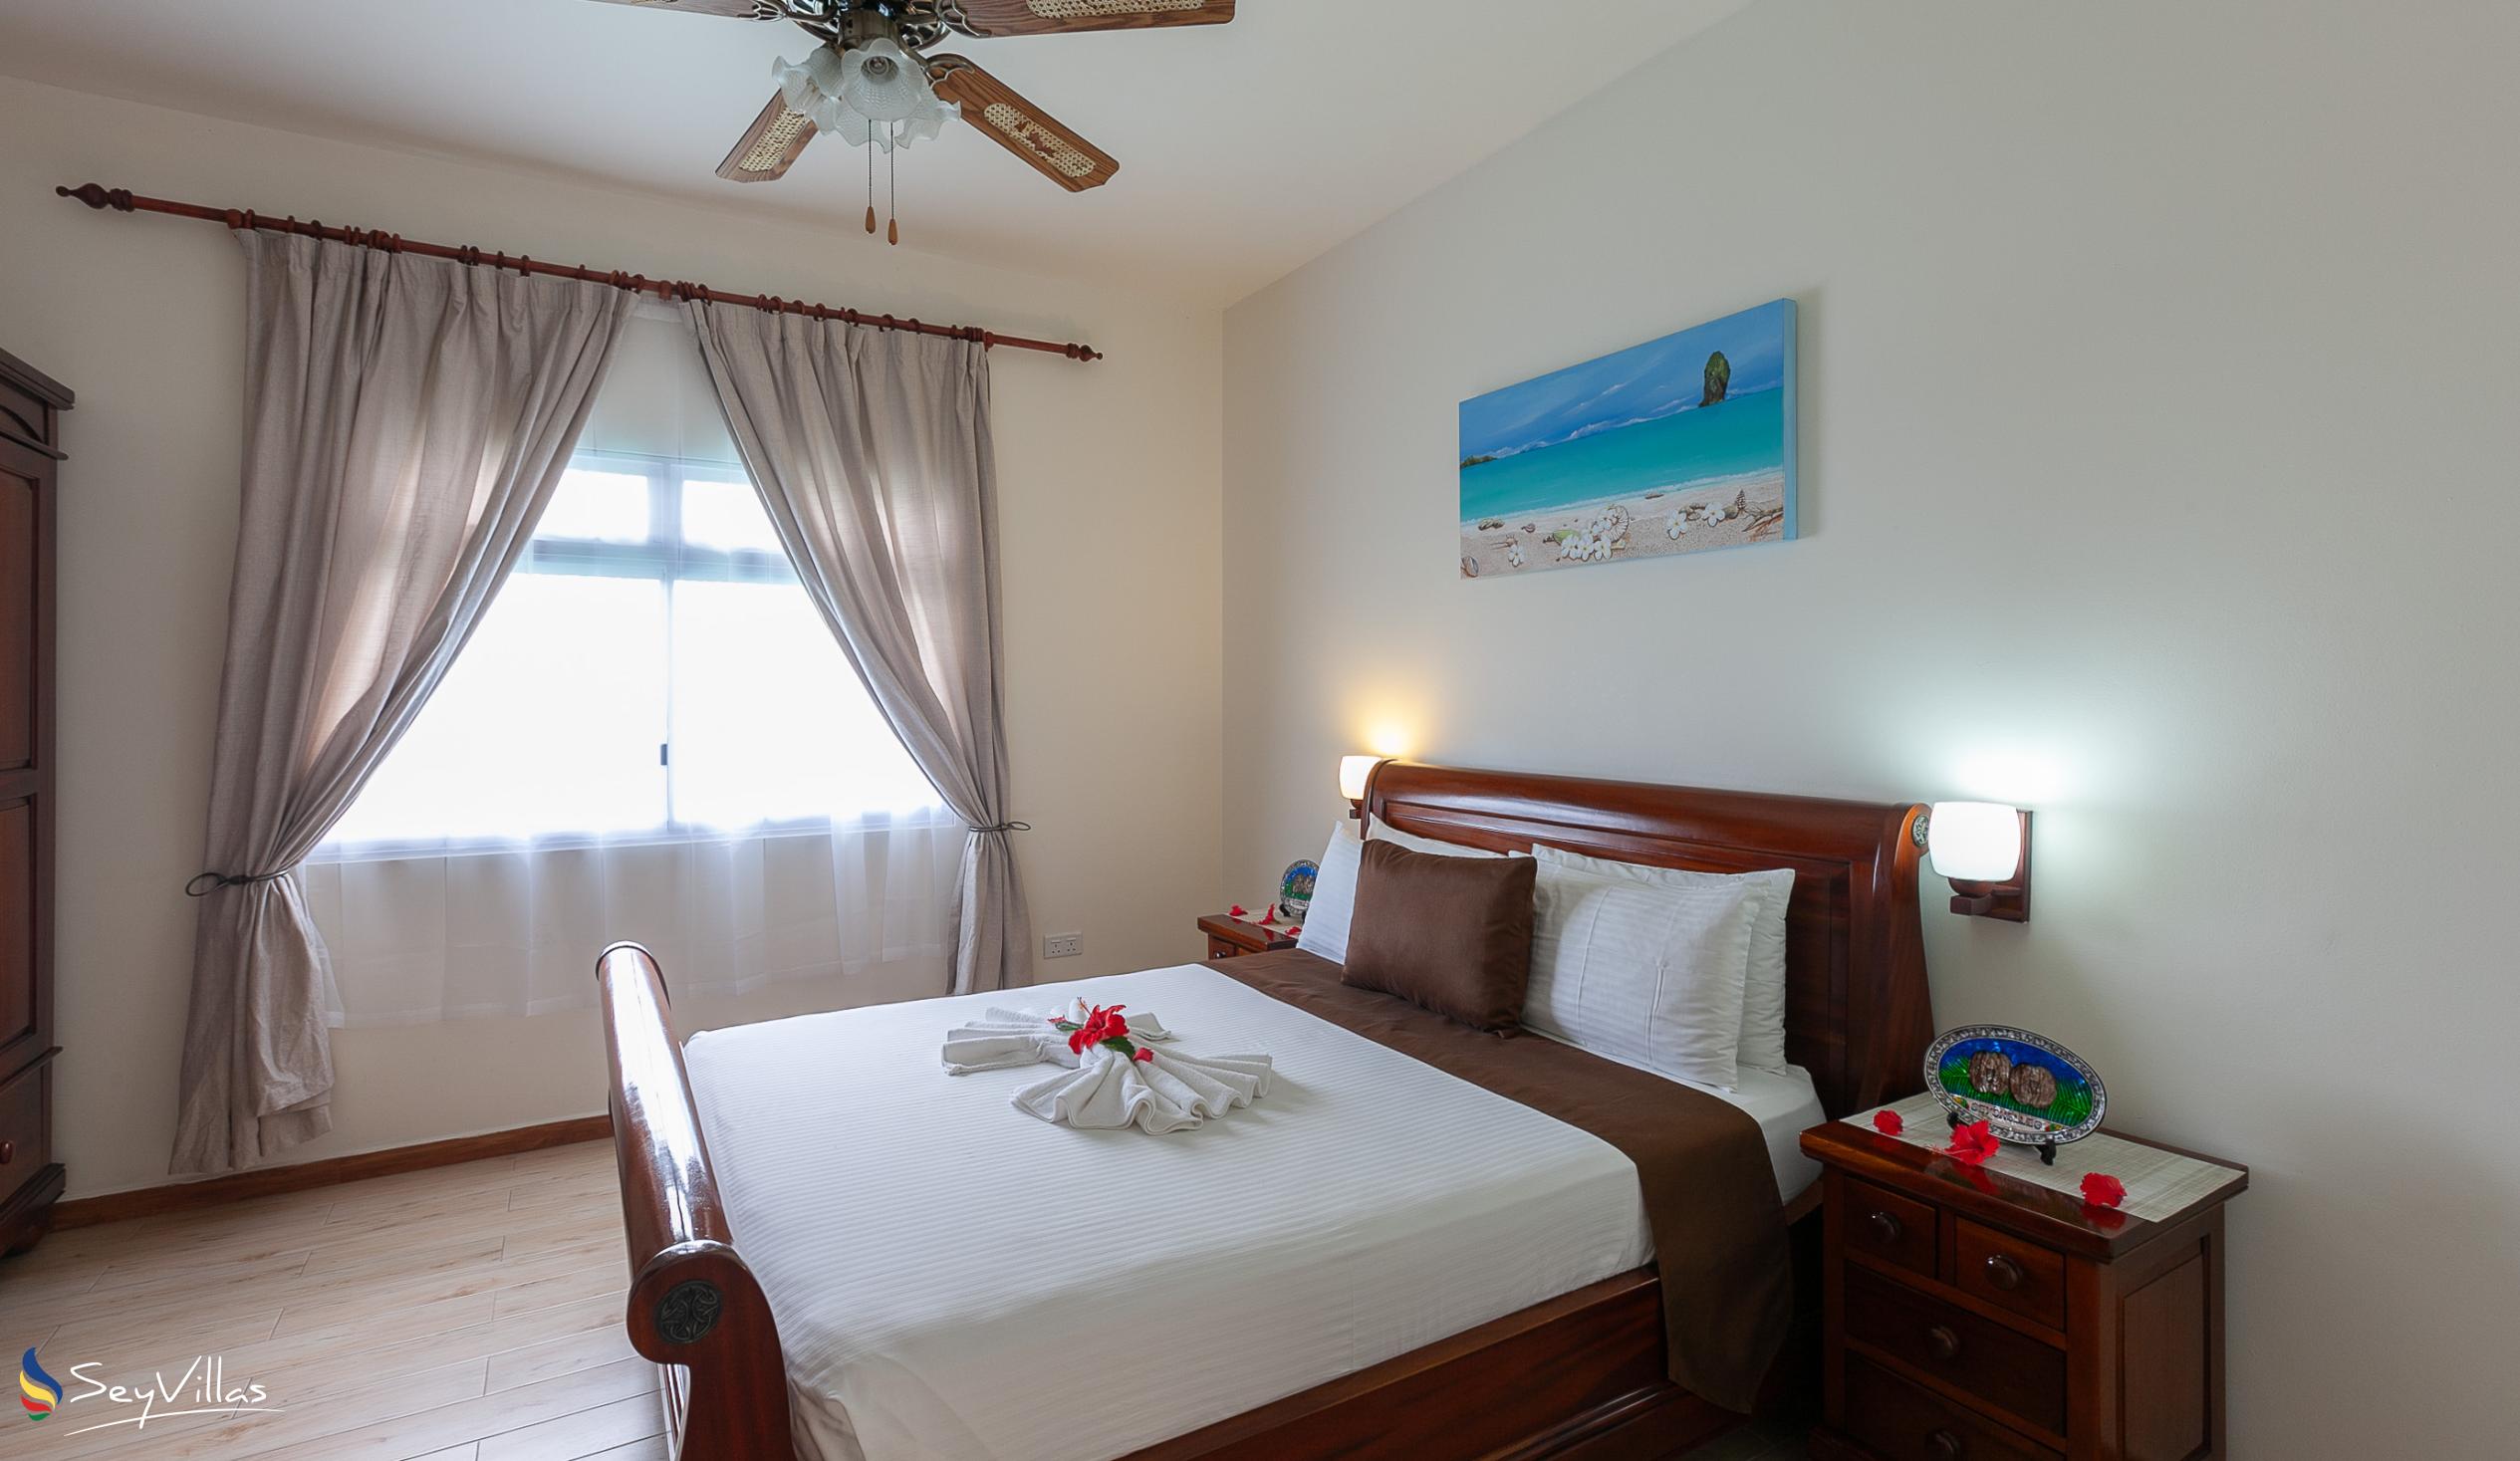 Photo 73: Seashell Beach Villa - 2-Bedroom Apartment - Praslin (Seychelles)